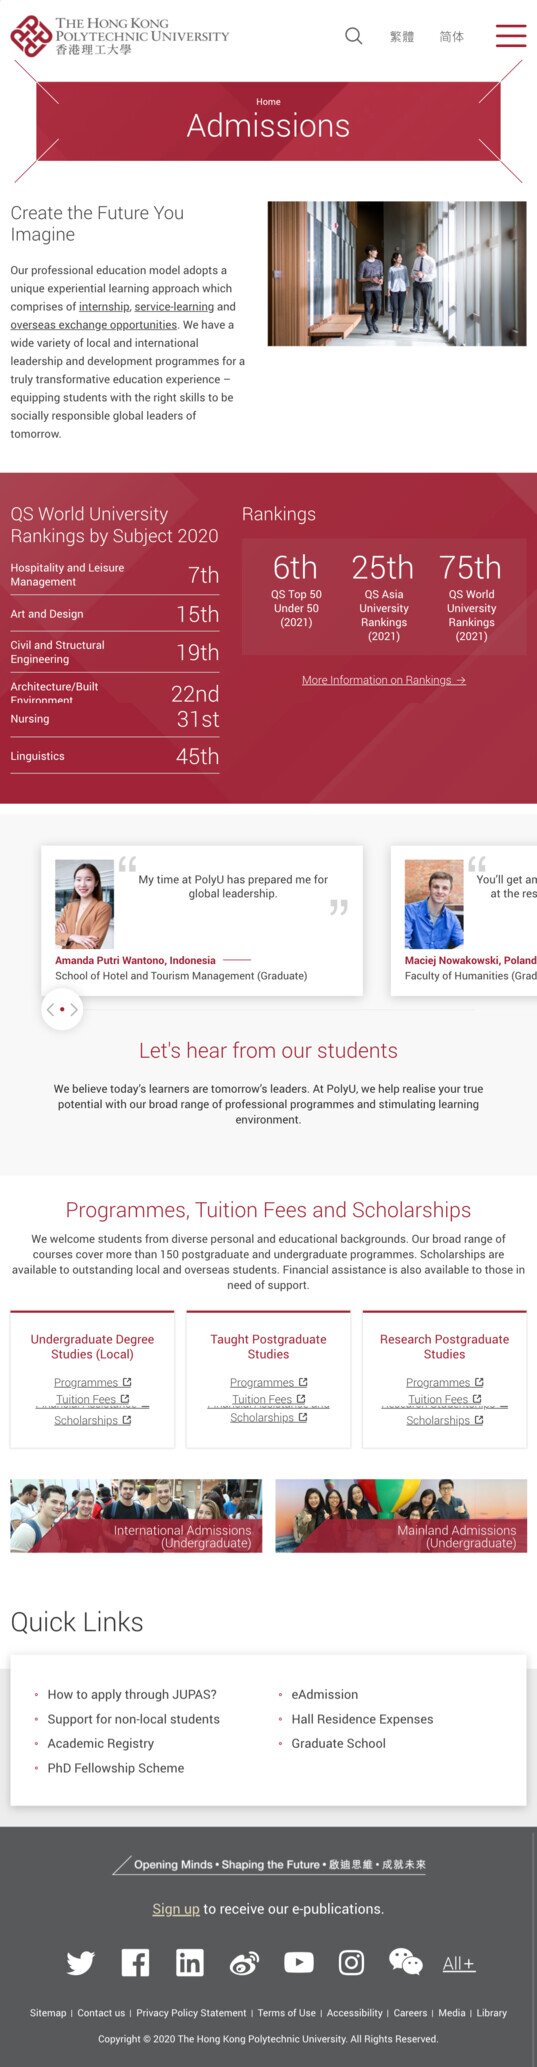 Hong Kong Polytechnic University website screenshot for tablet version 3 of 3